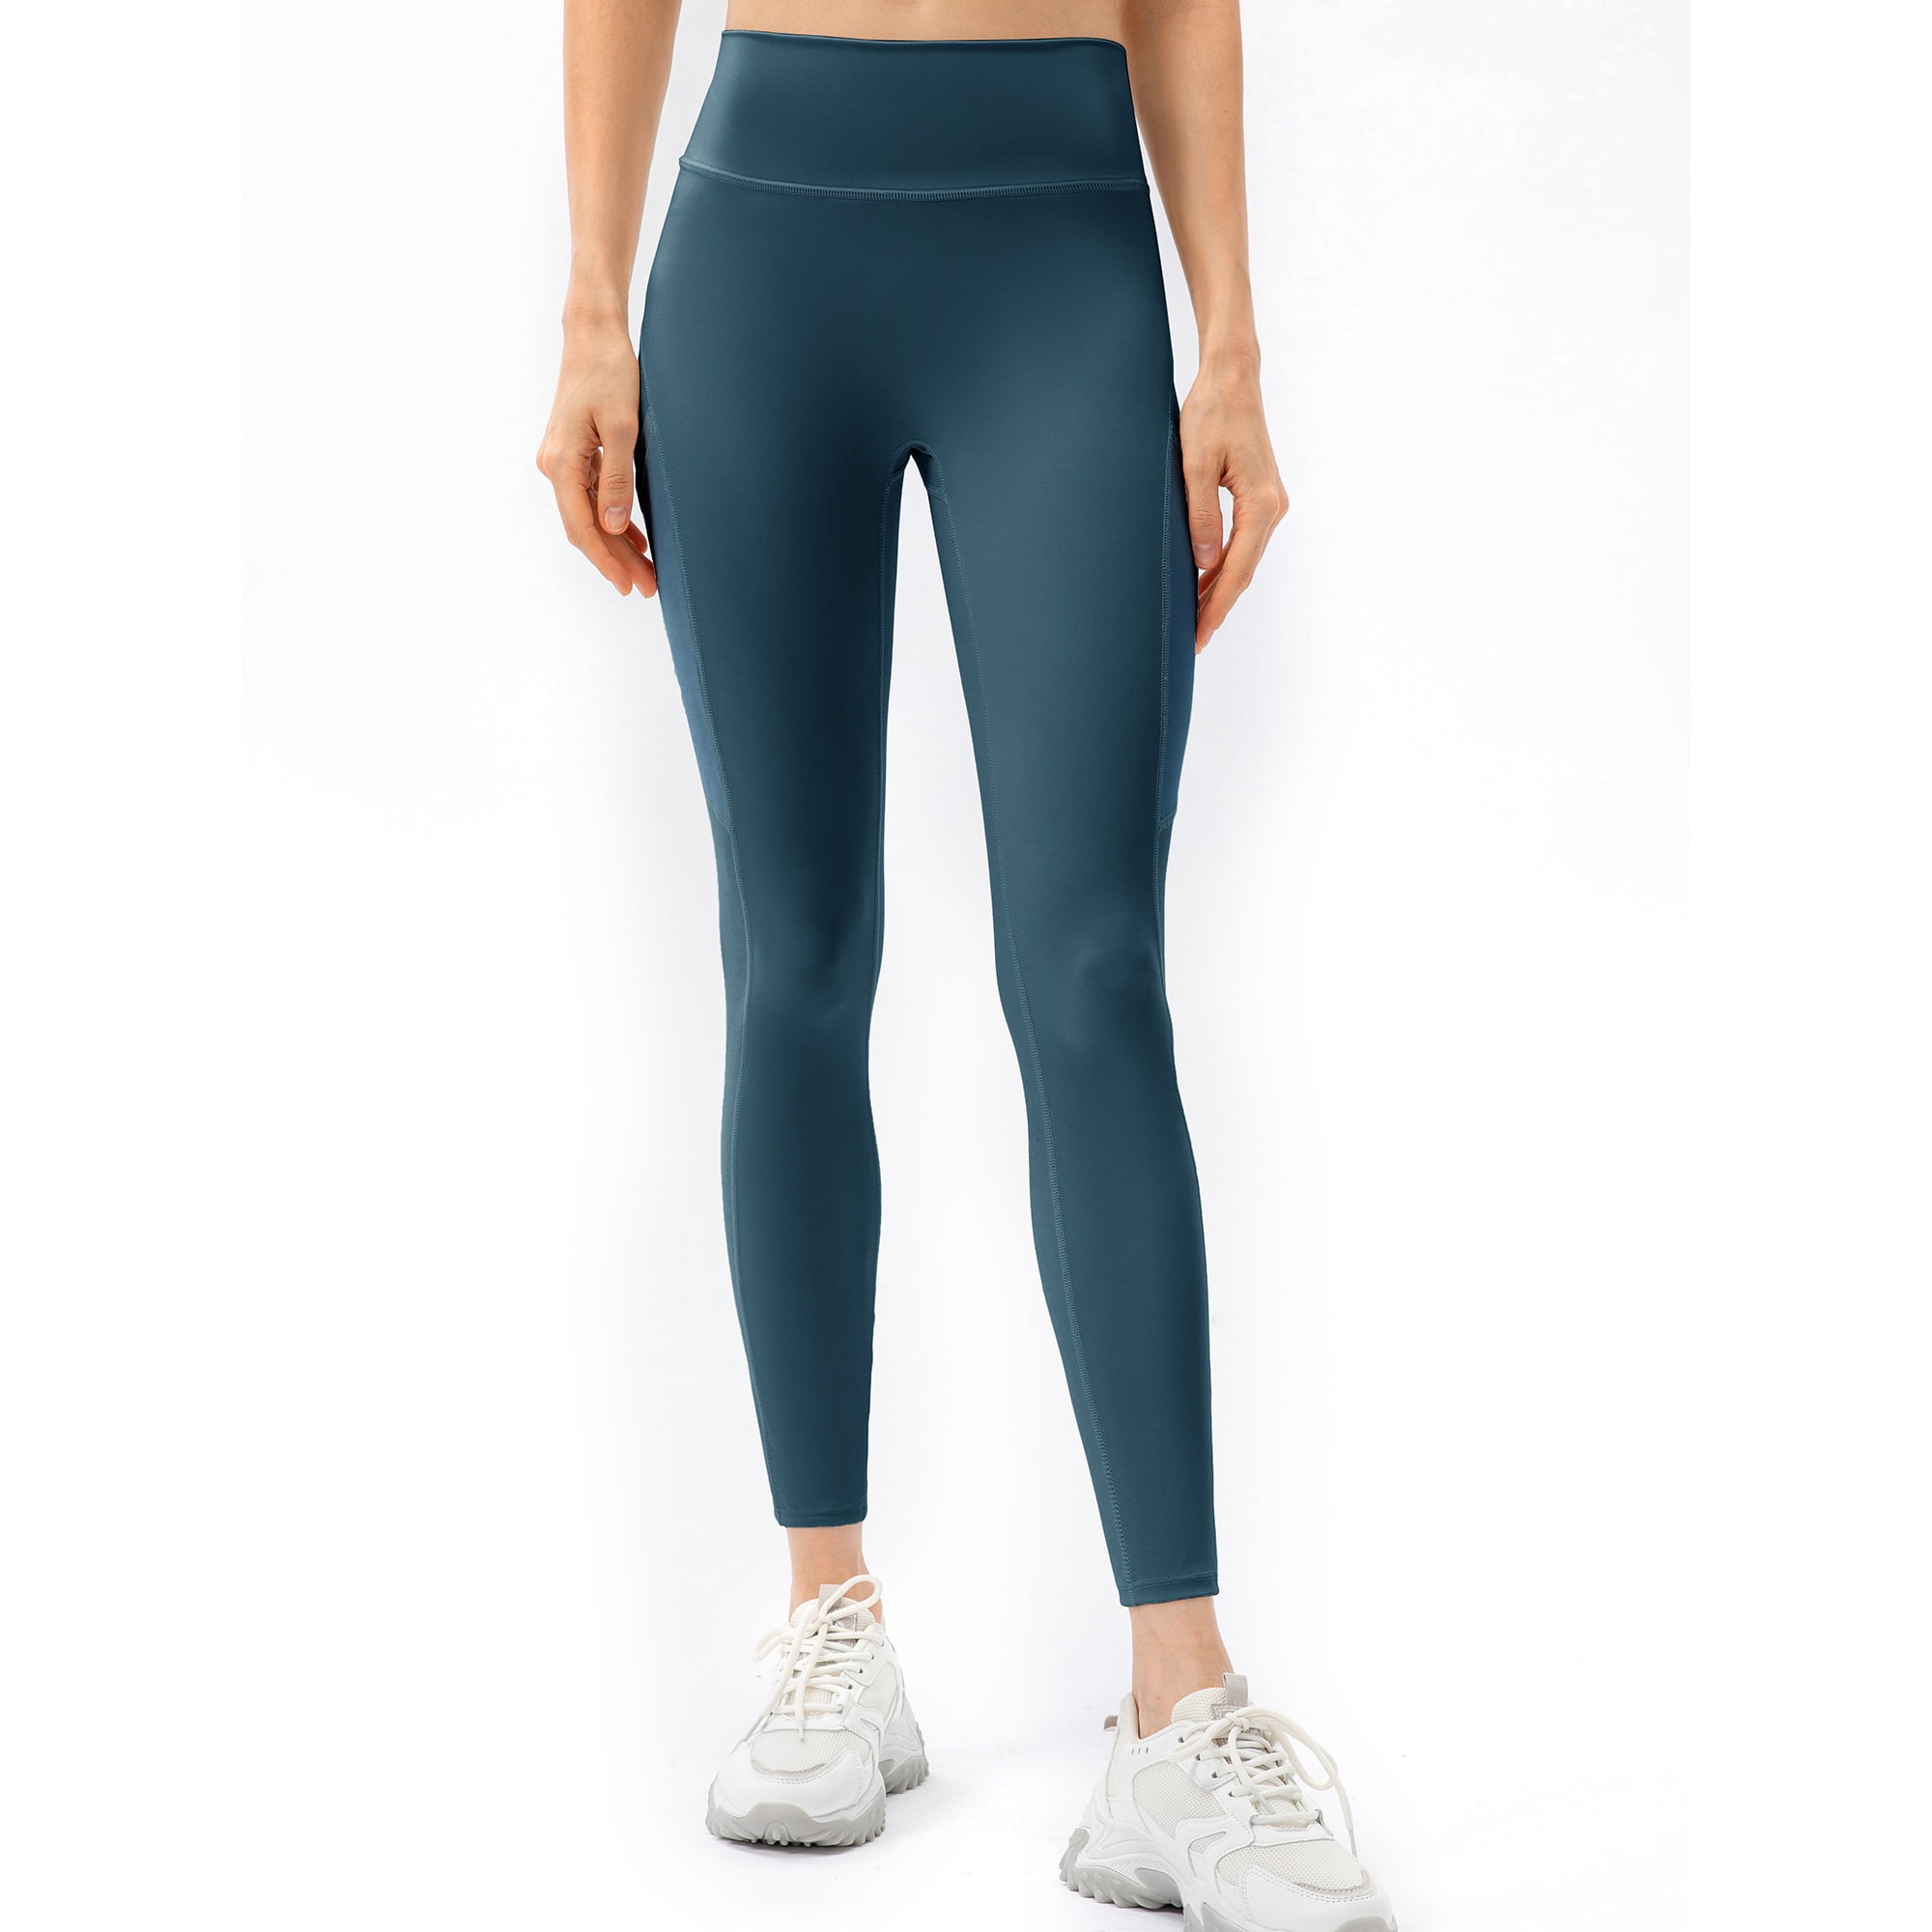 Pantalones de fitness mujeres pantalones de yoga elástico correr cintura  alta ajustada Pantalones deportivos - China Ropa de yoga y pantalones precio